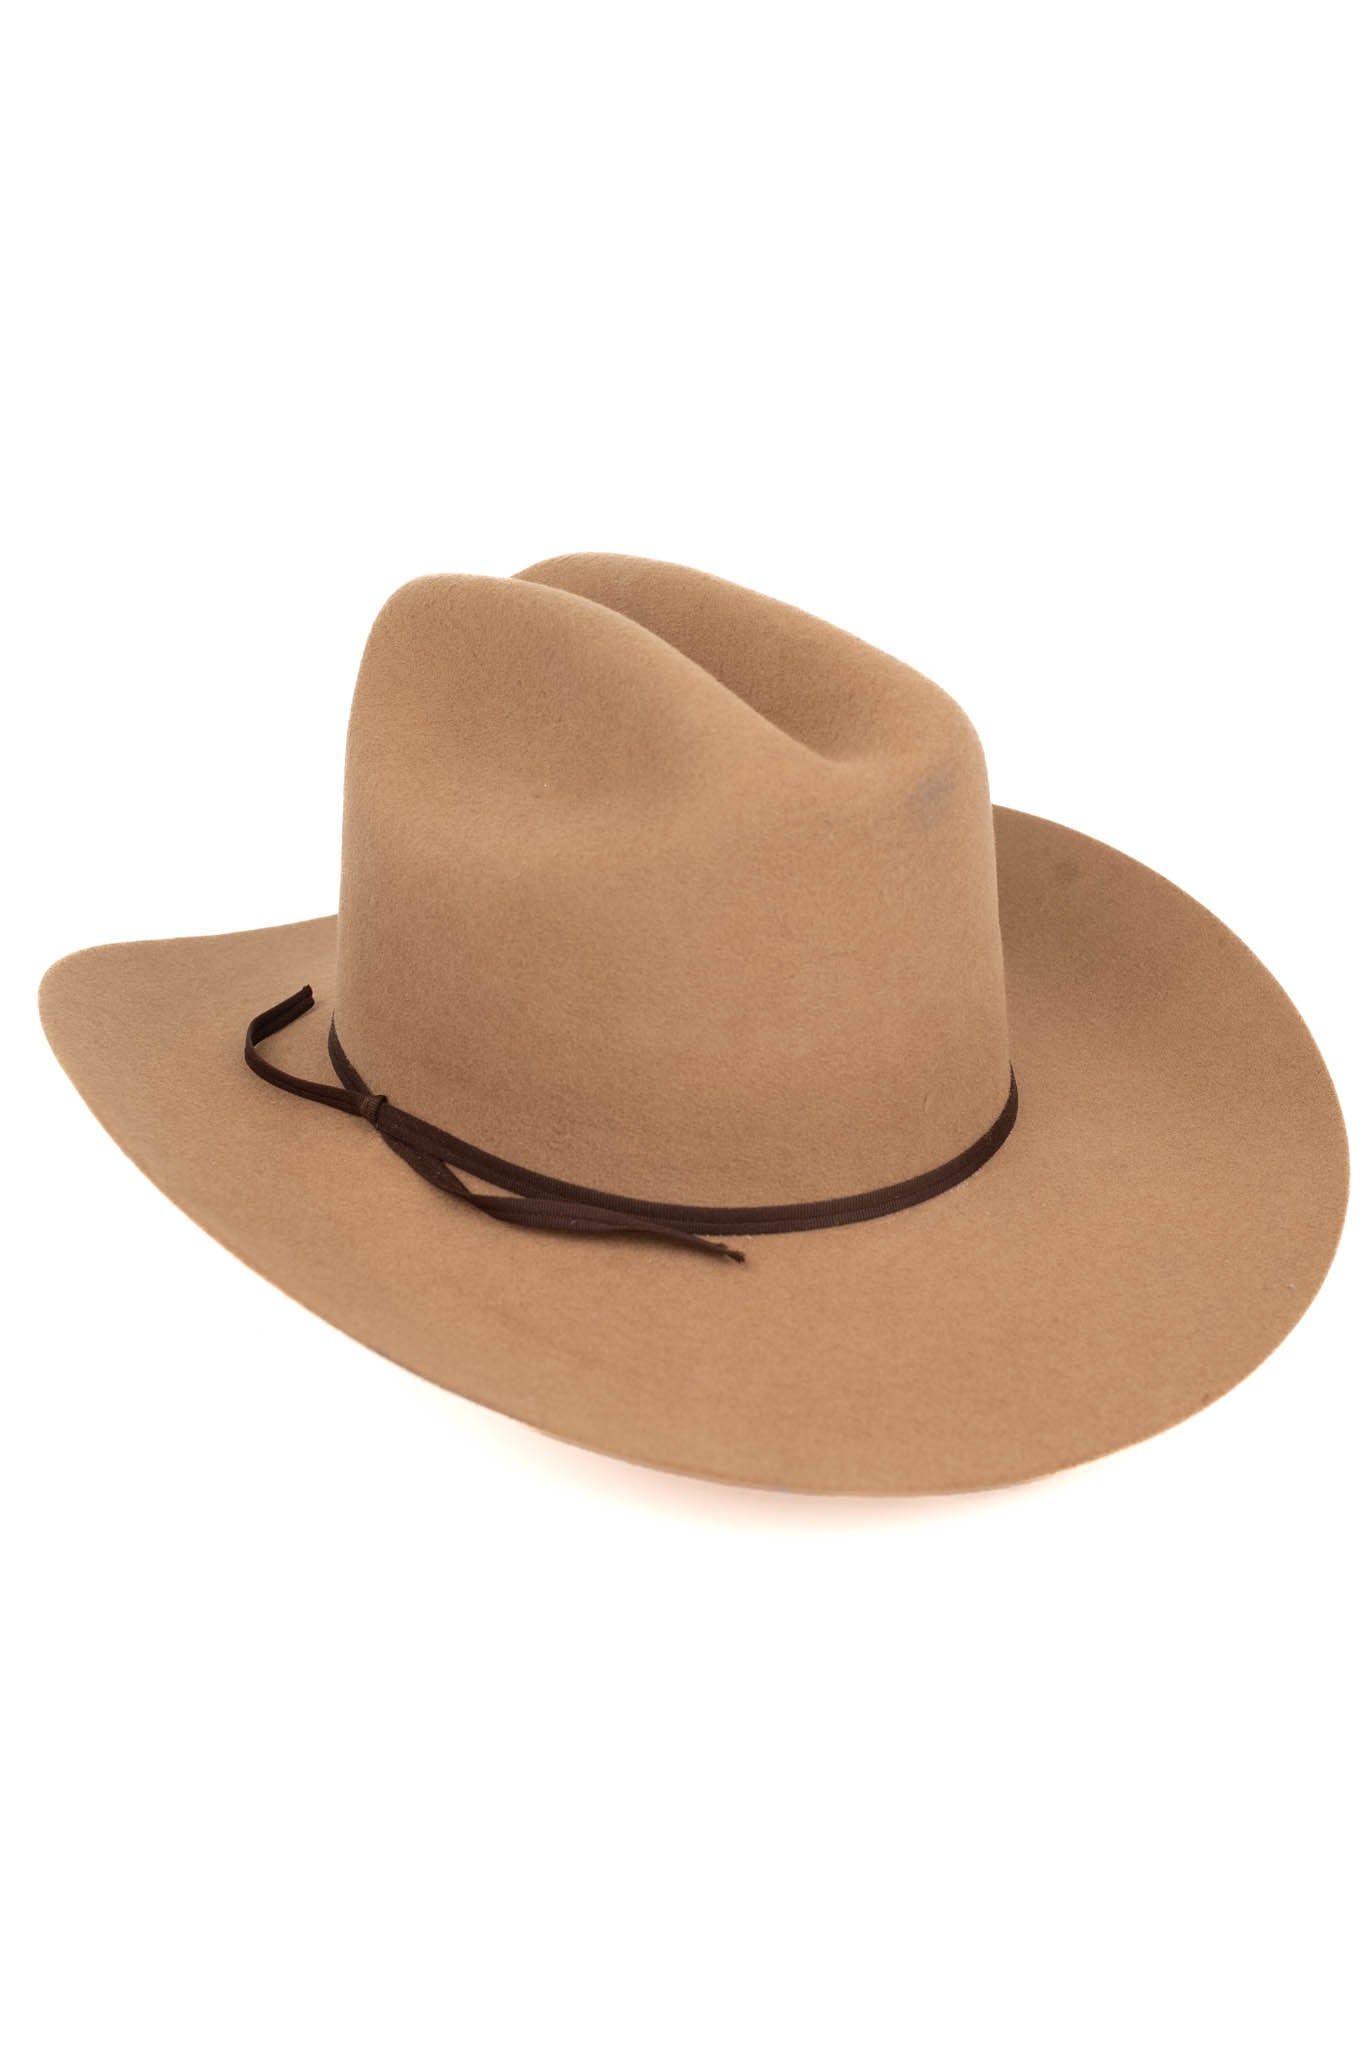 Sinaloa 6X Felt Hat